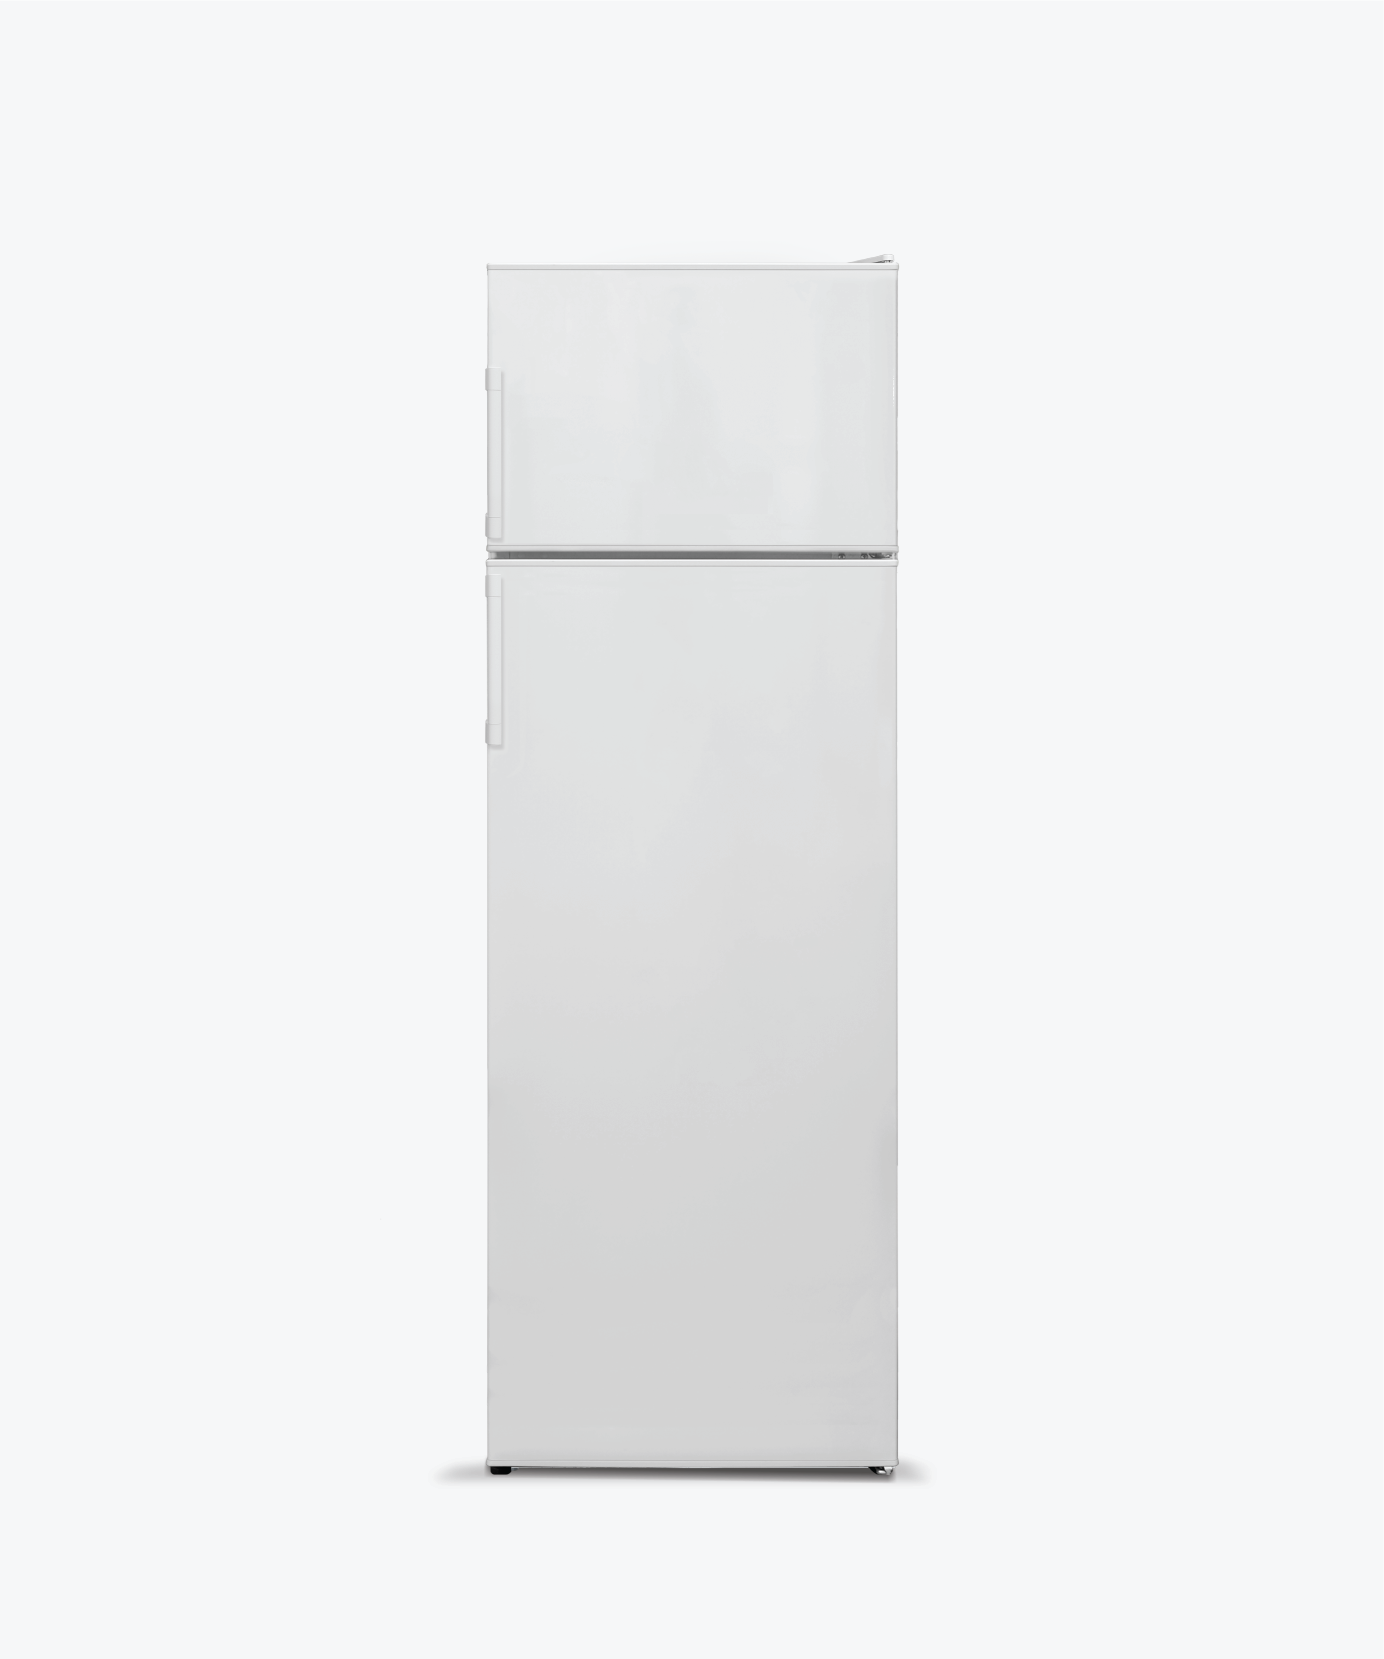 14 Feet White Refrigerator||Refrigerators 